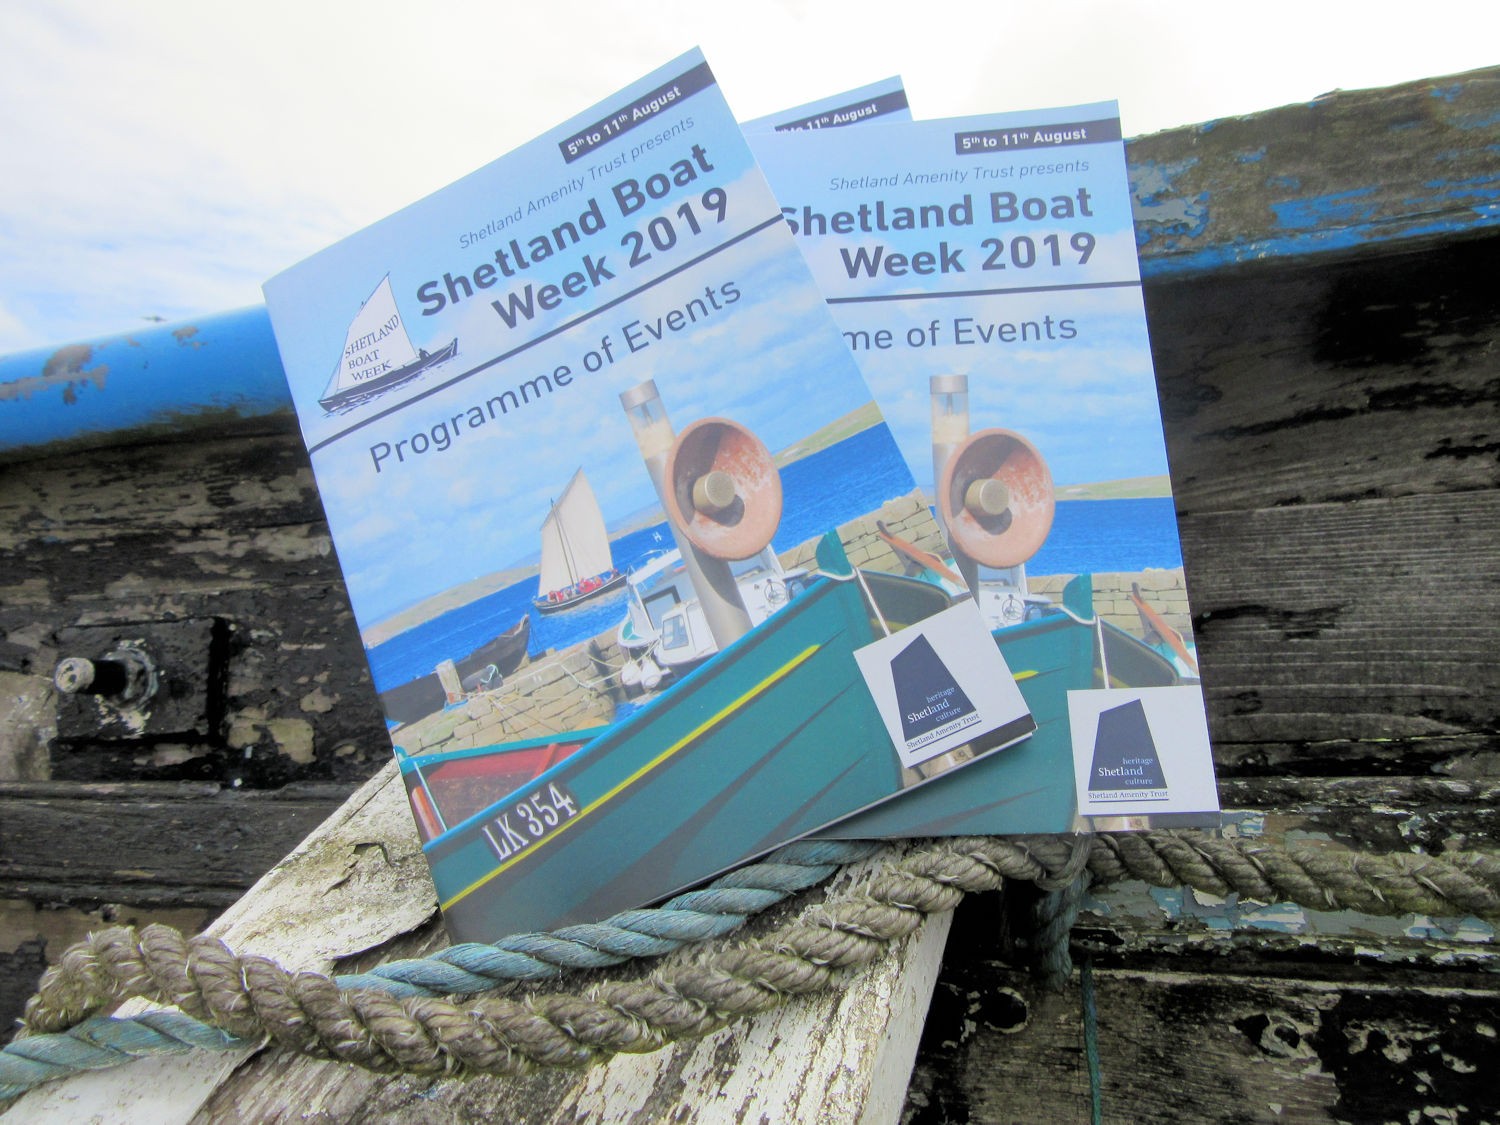 Shetland Boat Week starts next week